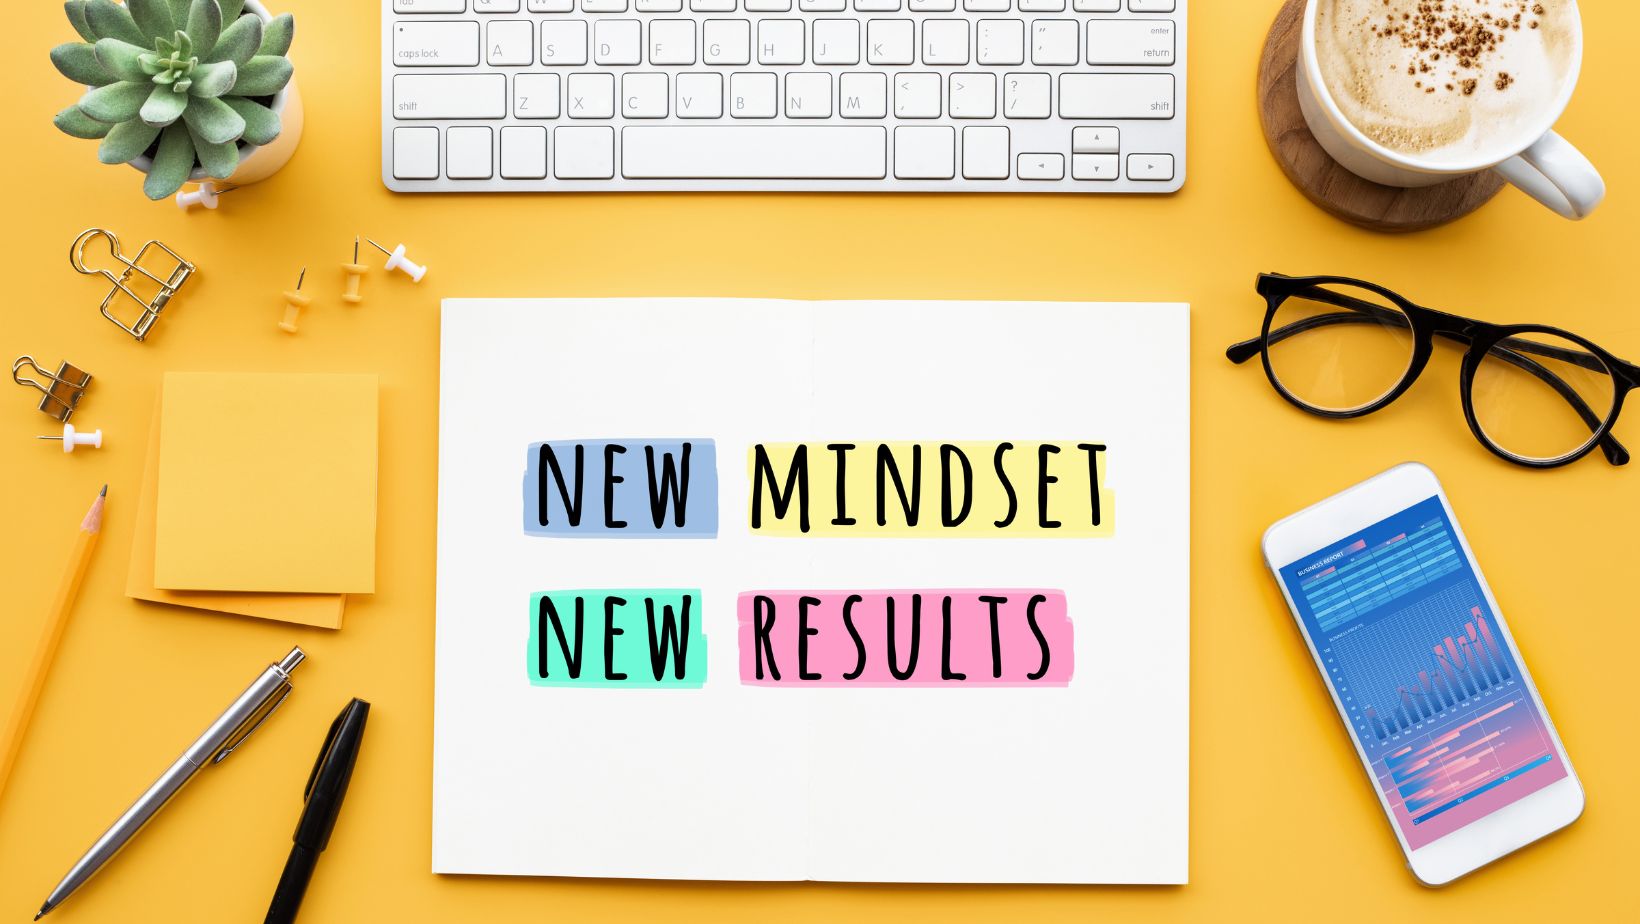 Abundance mindset - new mindset new results